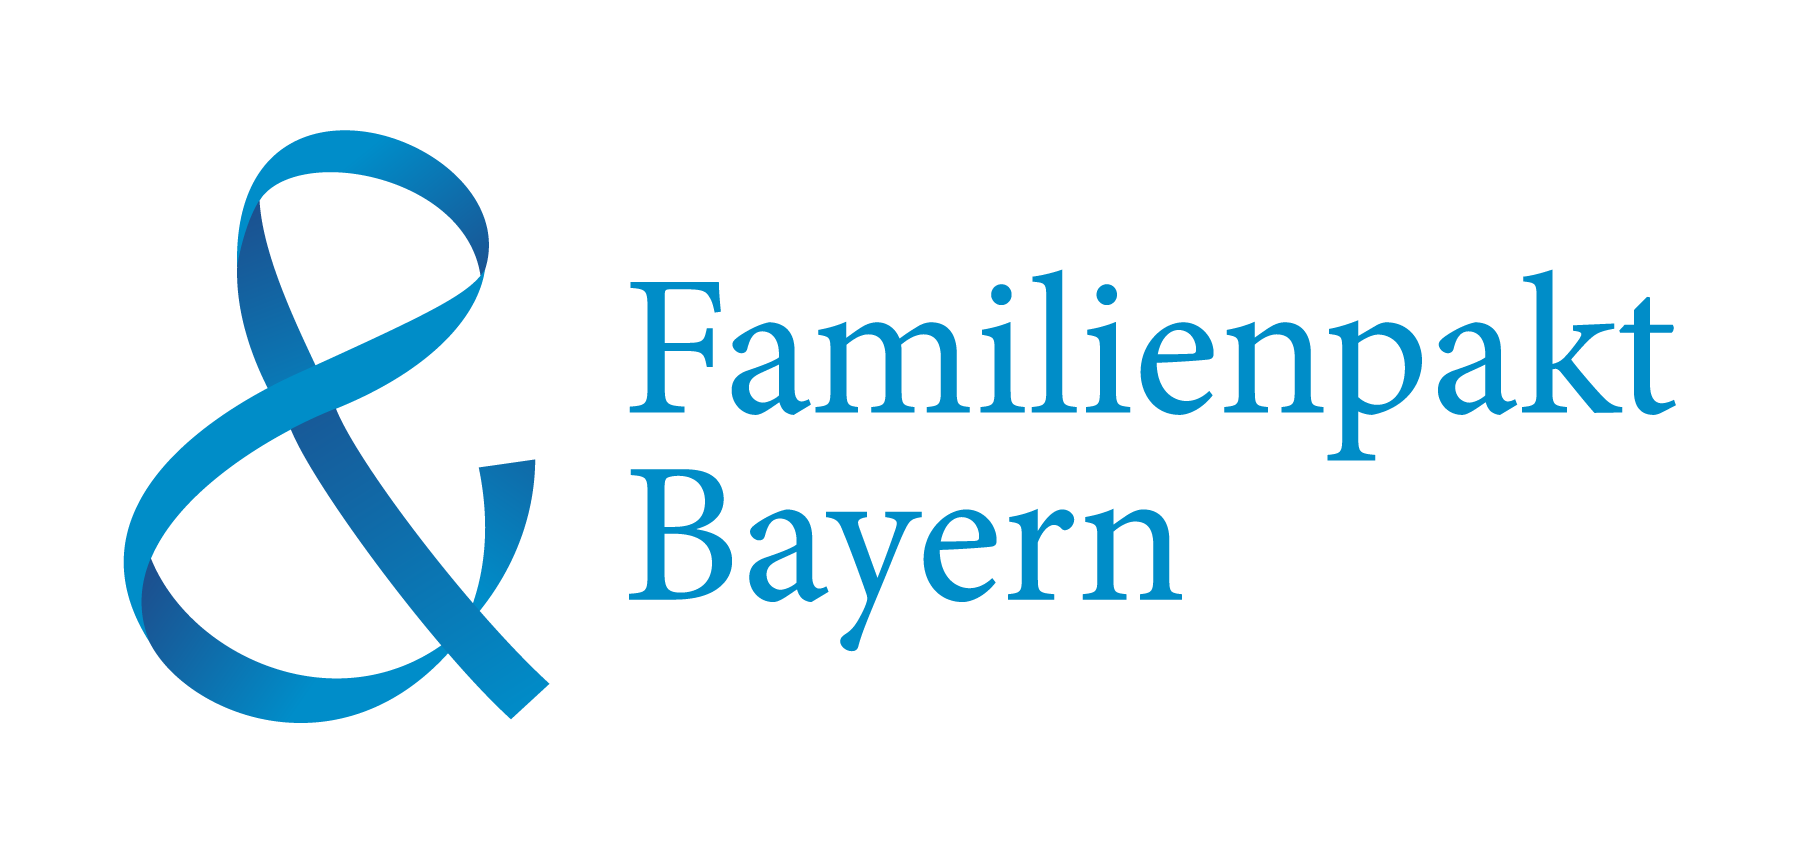 Familienpakt Bayern RGB 150dpi